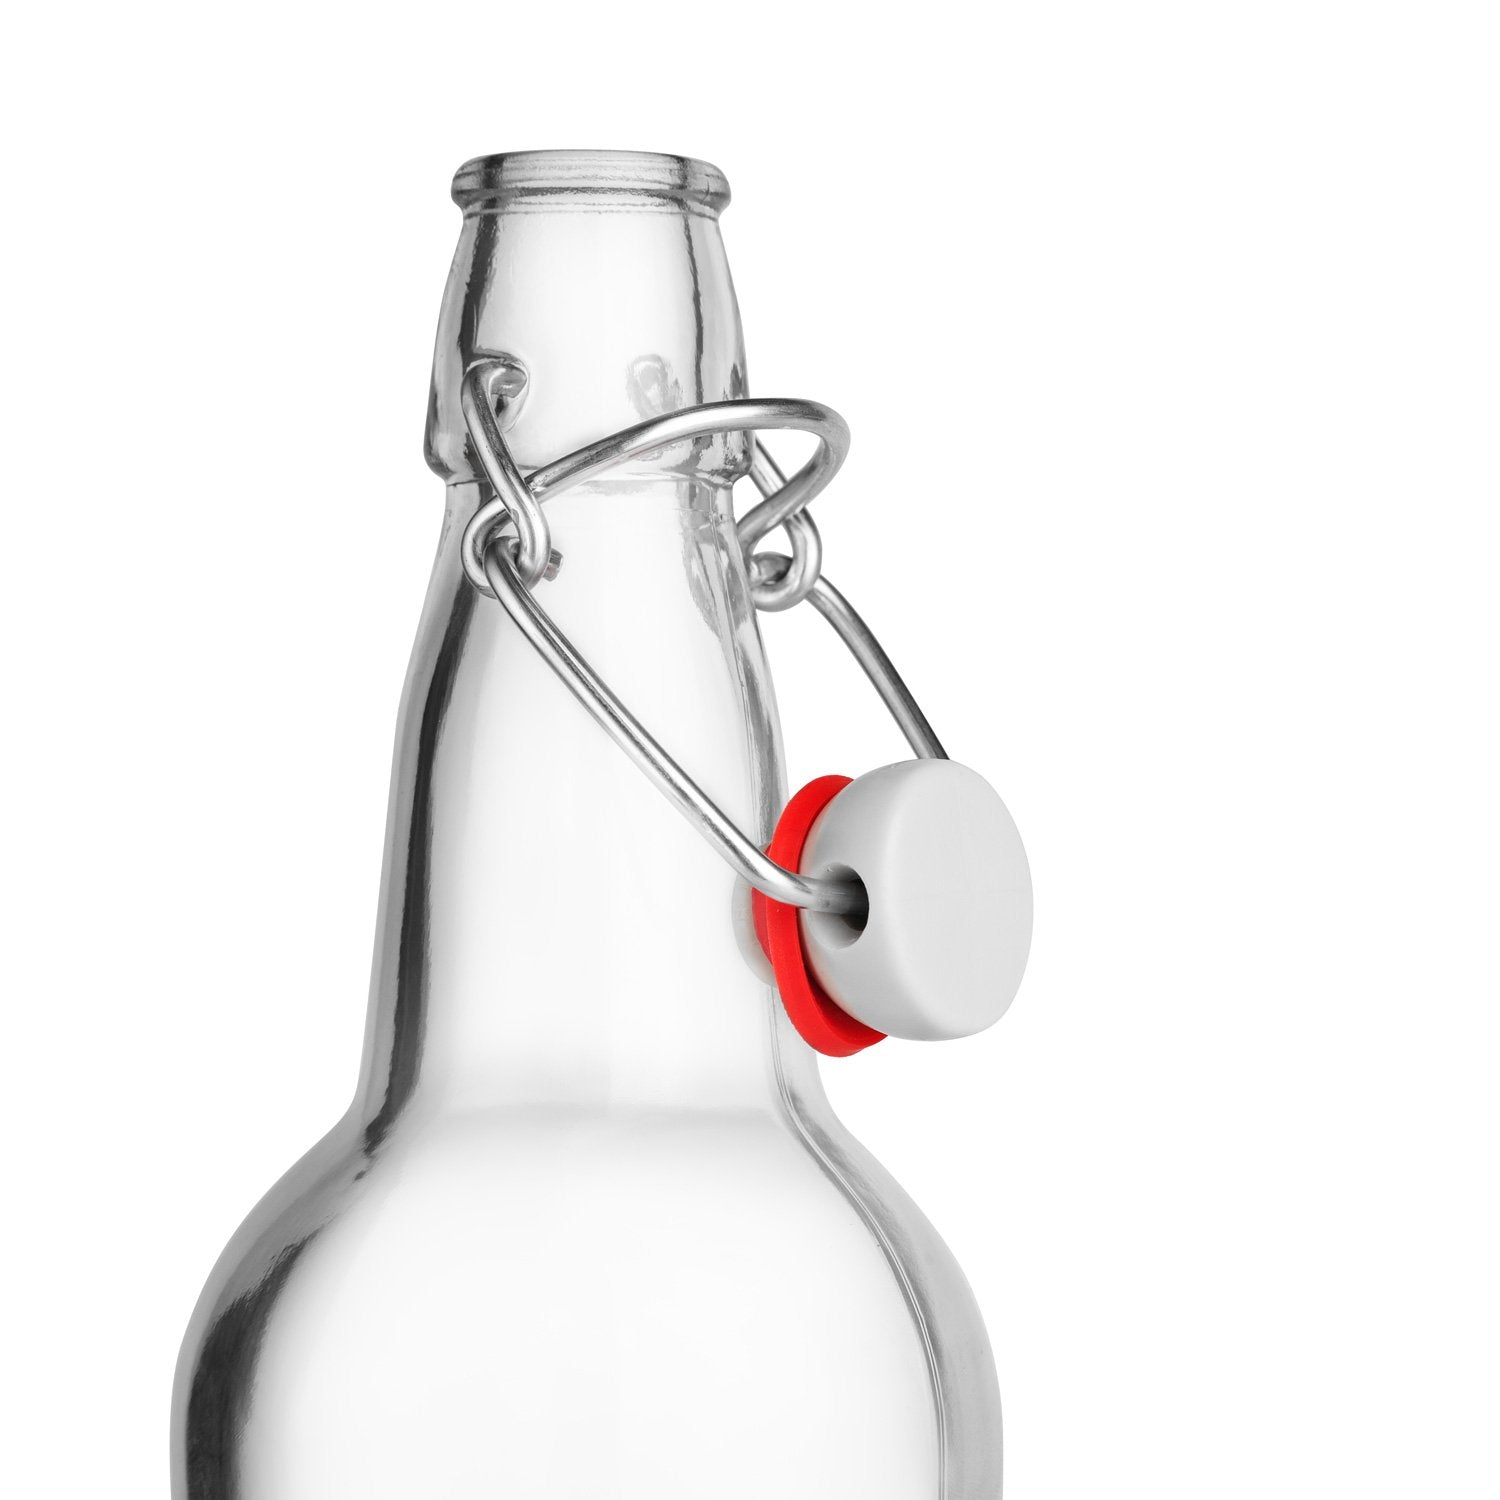 Bellemain Swing Top Grolsch Glass Bottles 16oz - CLEAR - For